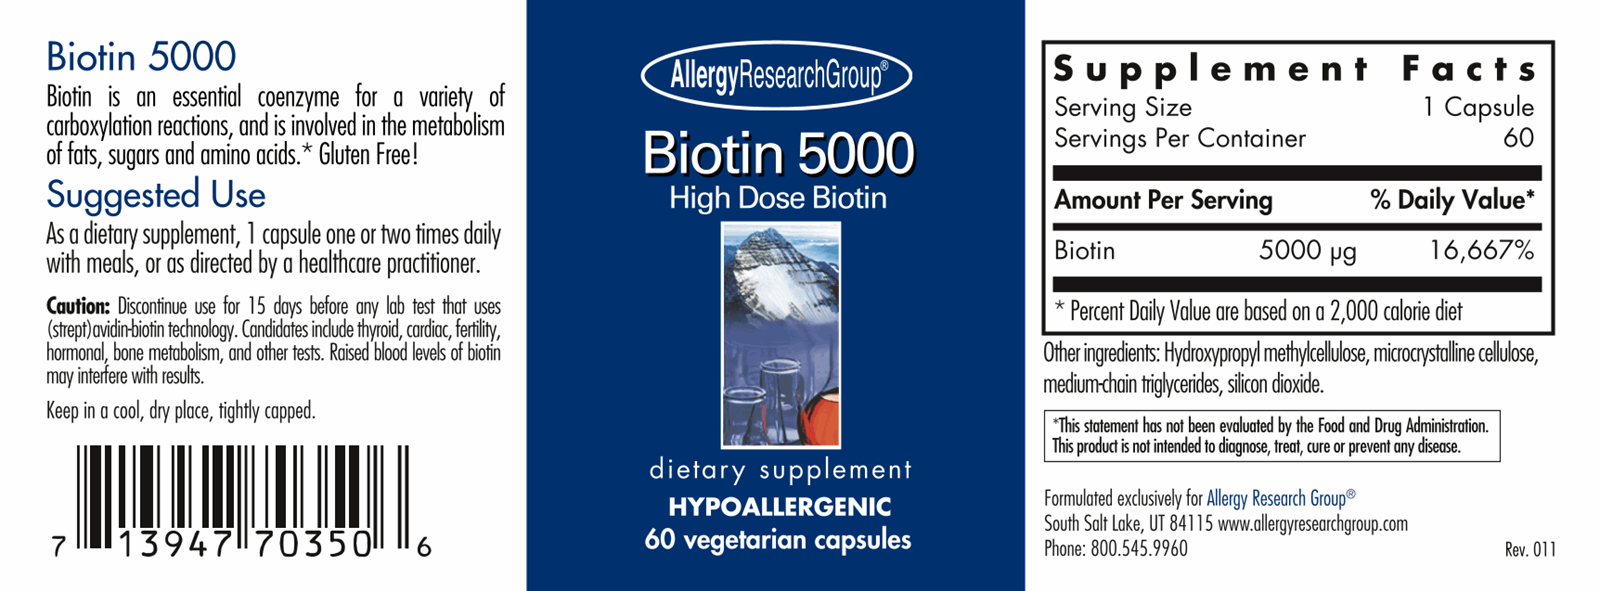 Biotin 5000 